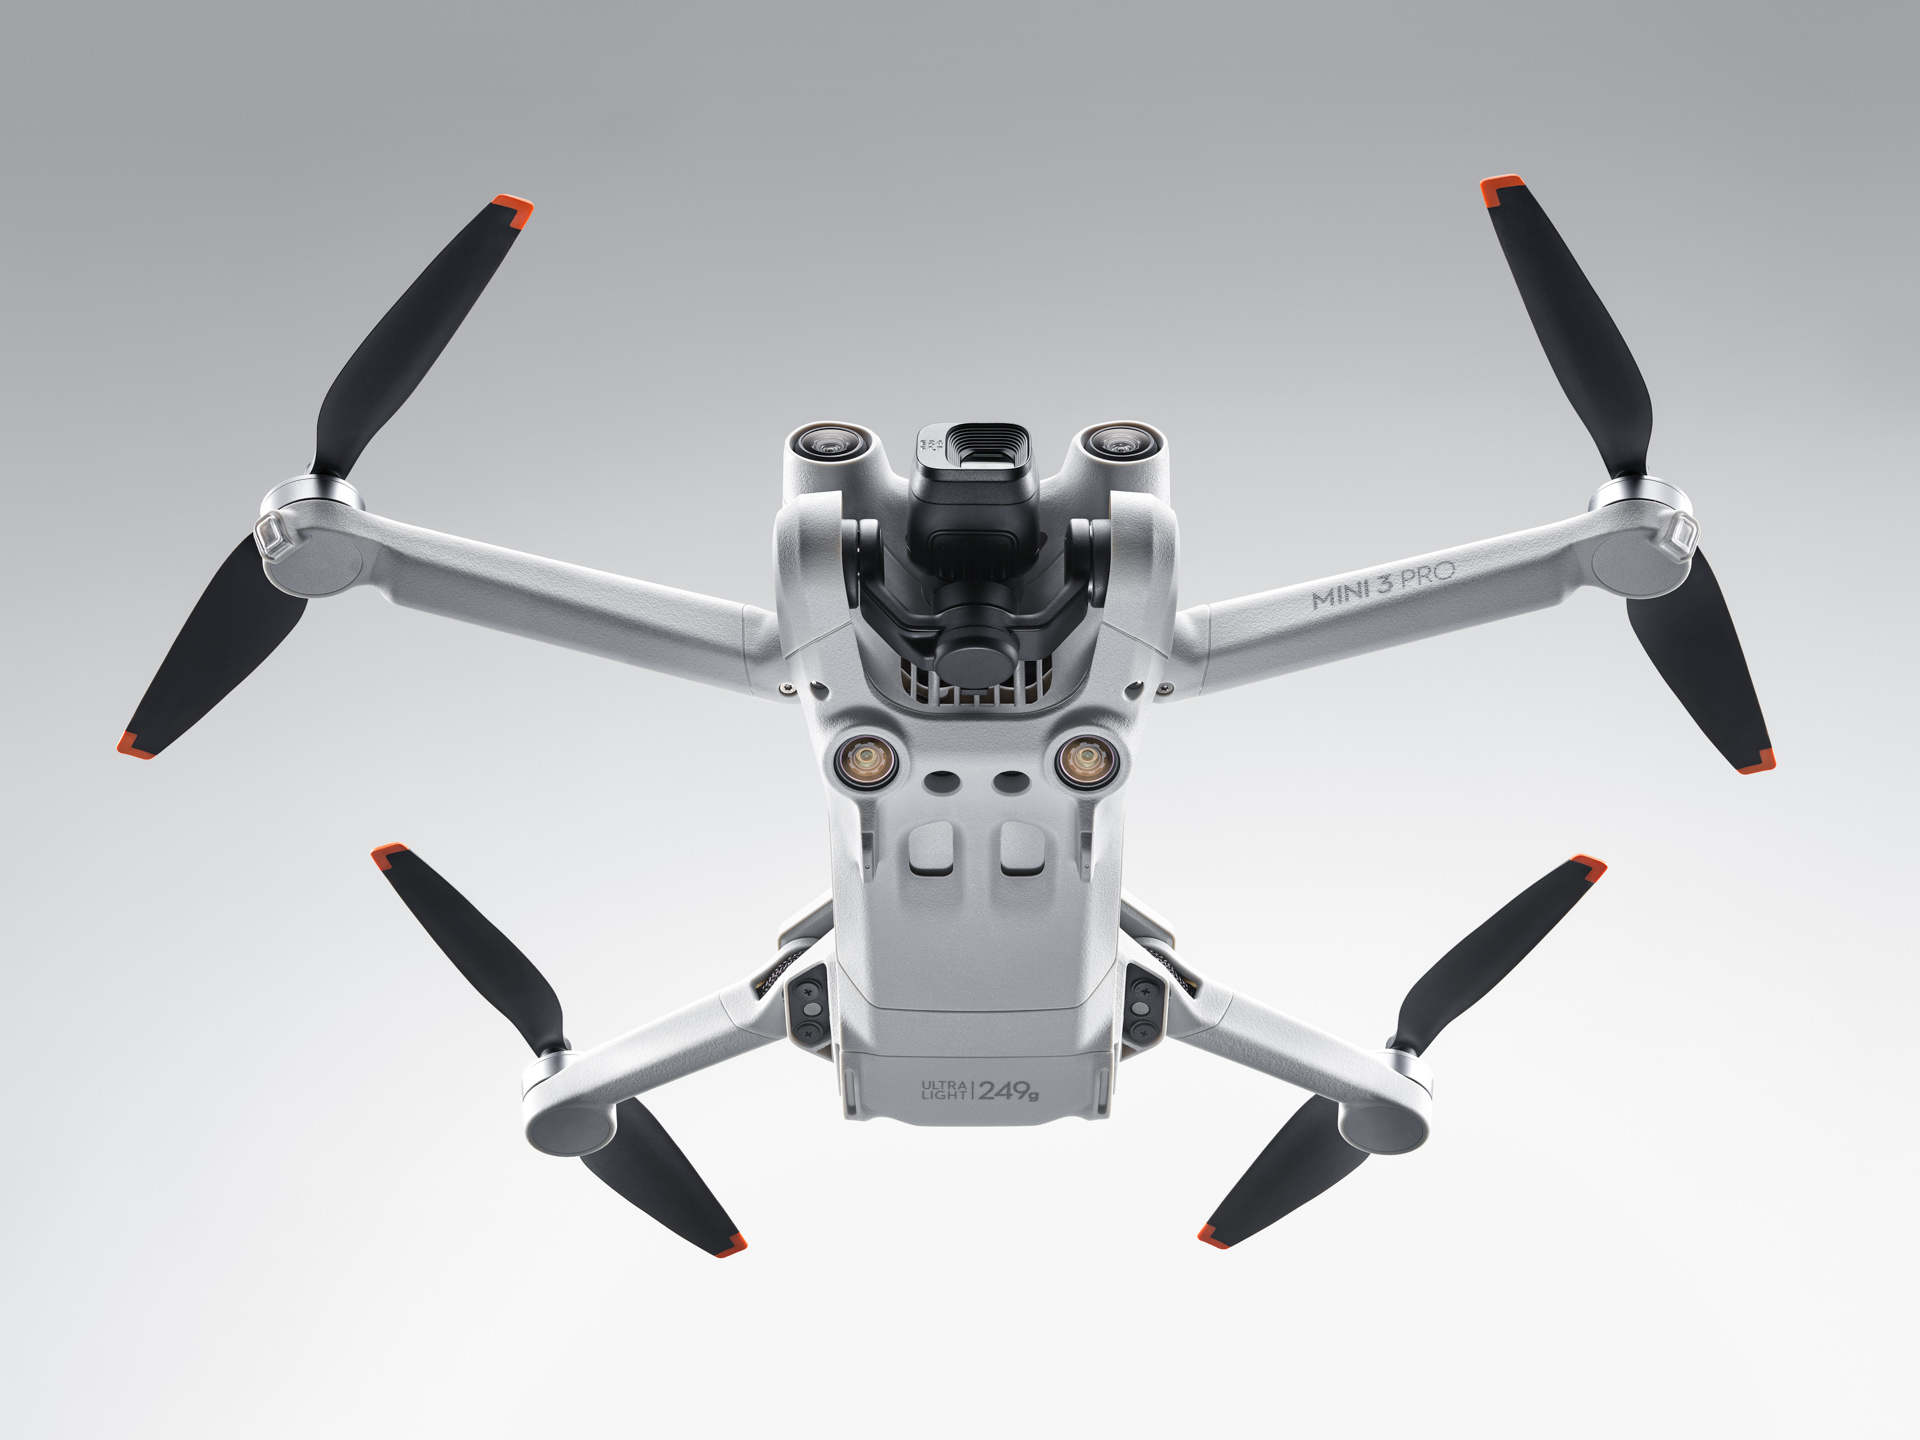 DJI Mini 3 Pro Sub249g Drone Newsshooter